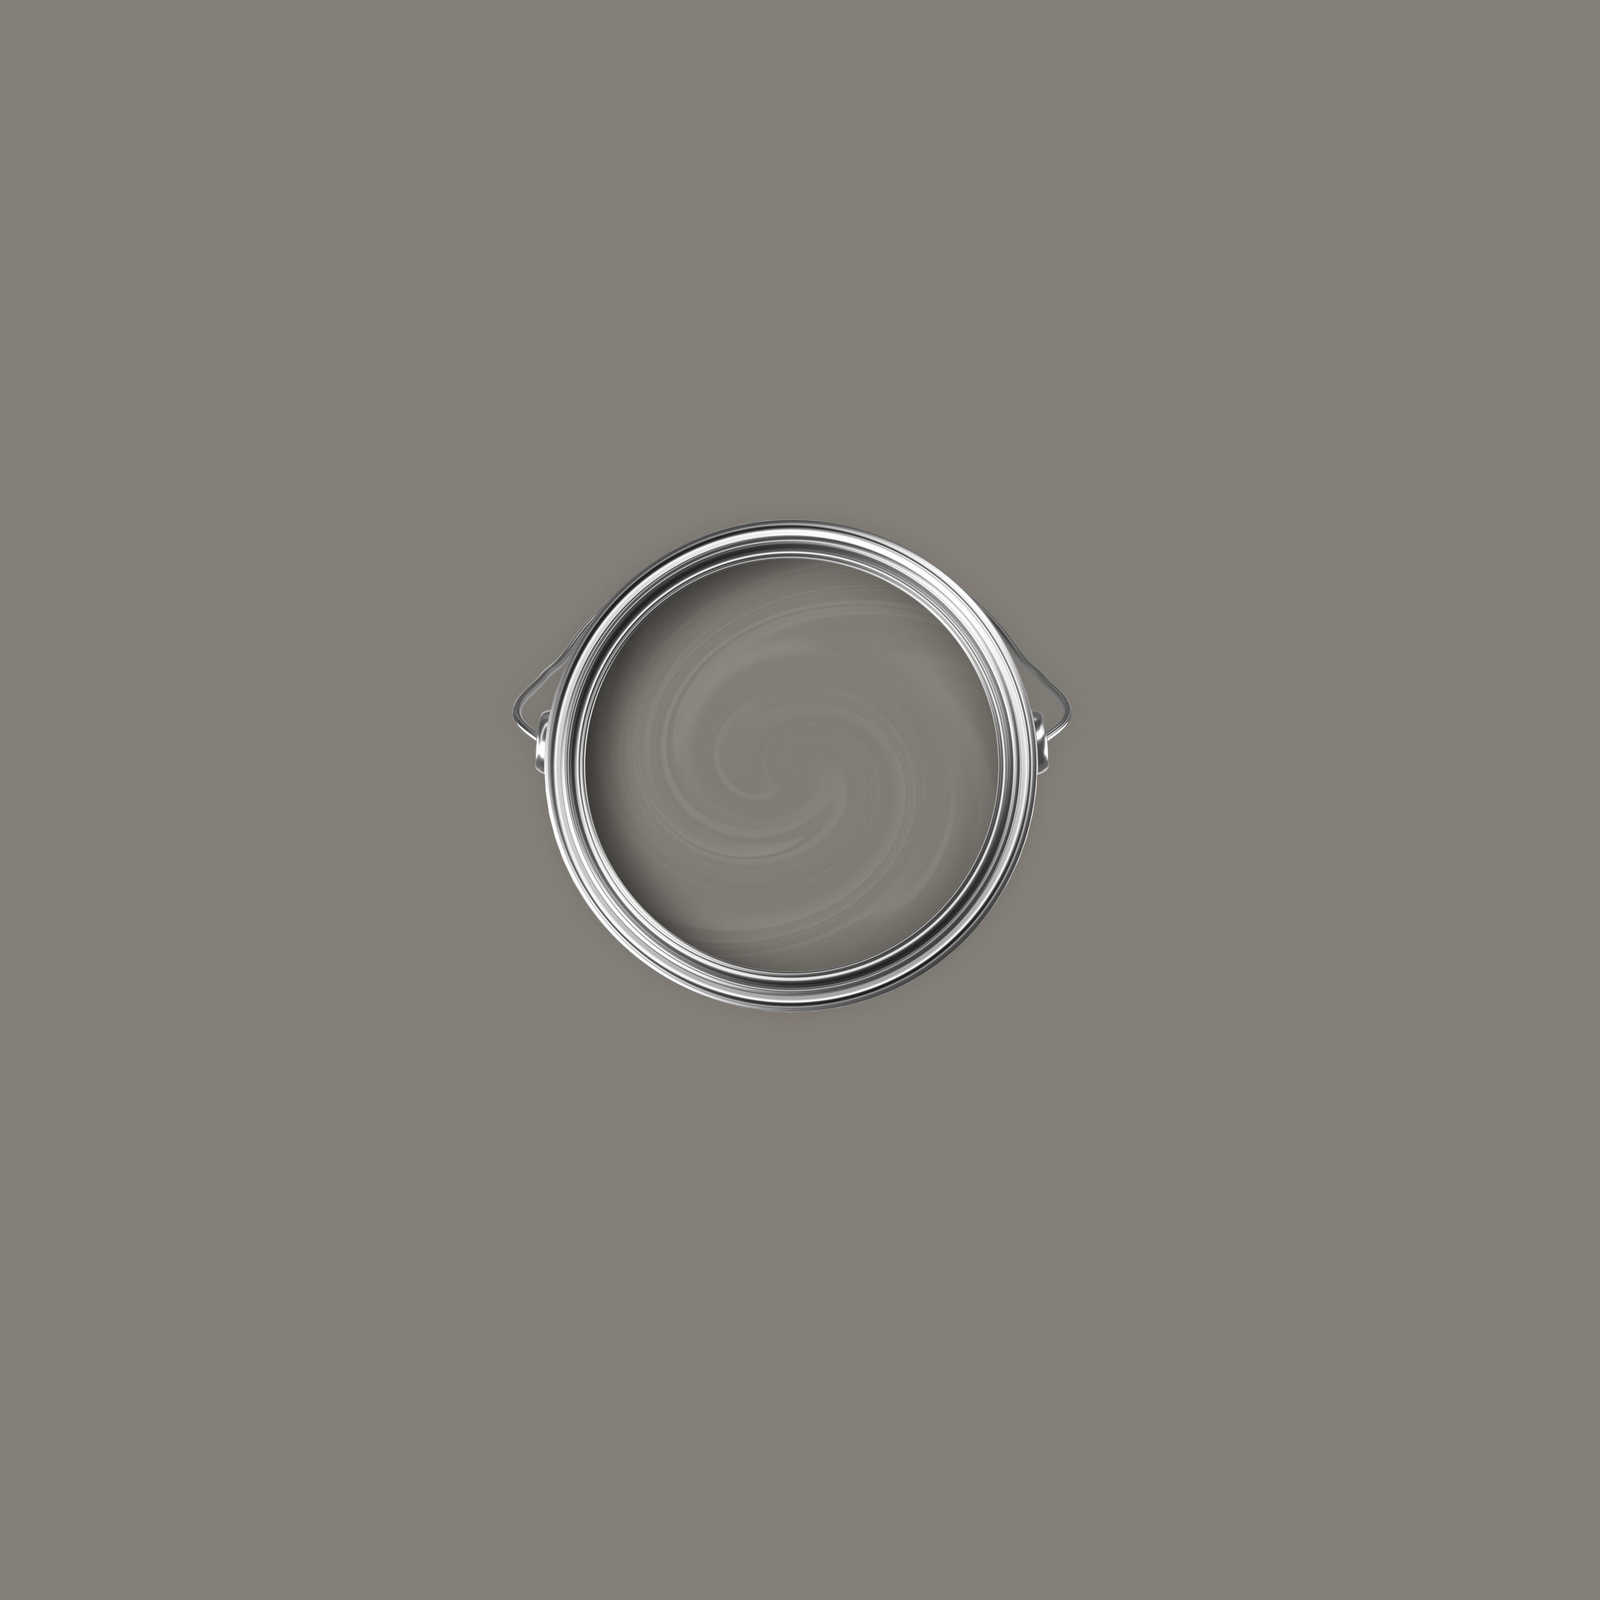             Premium Wall Paint neutral concrete grey »Creamy Grey« NW112 – 1 litre
        